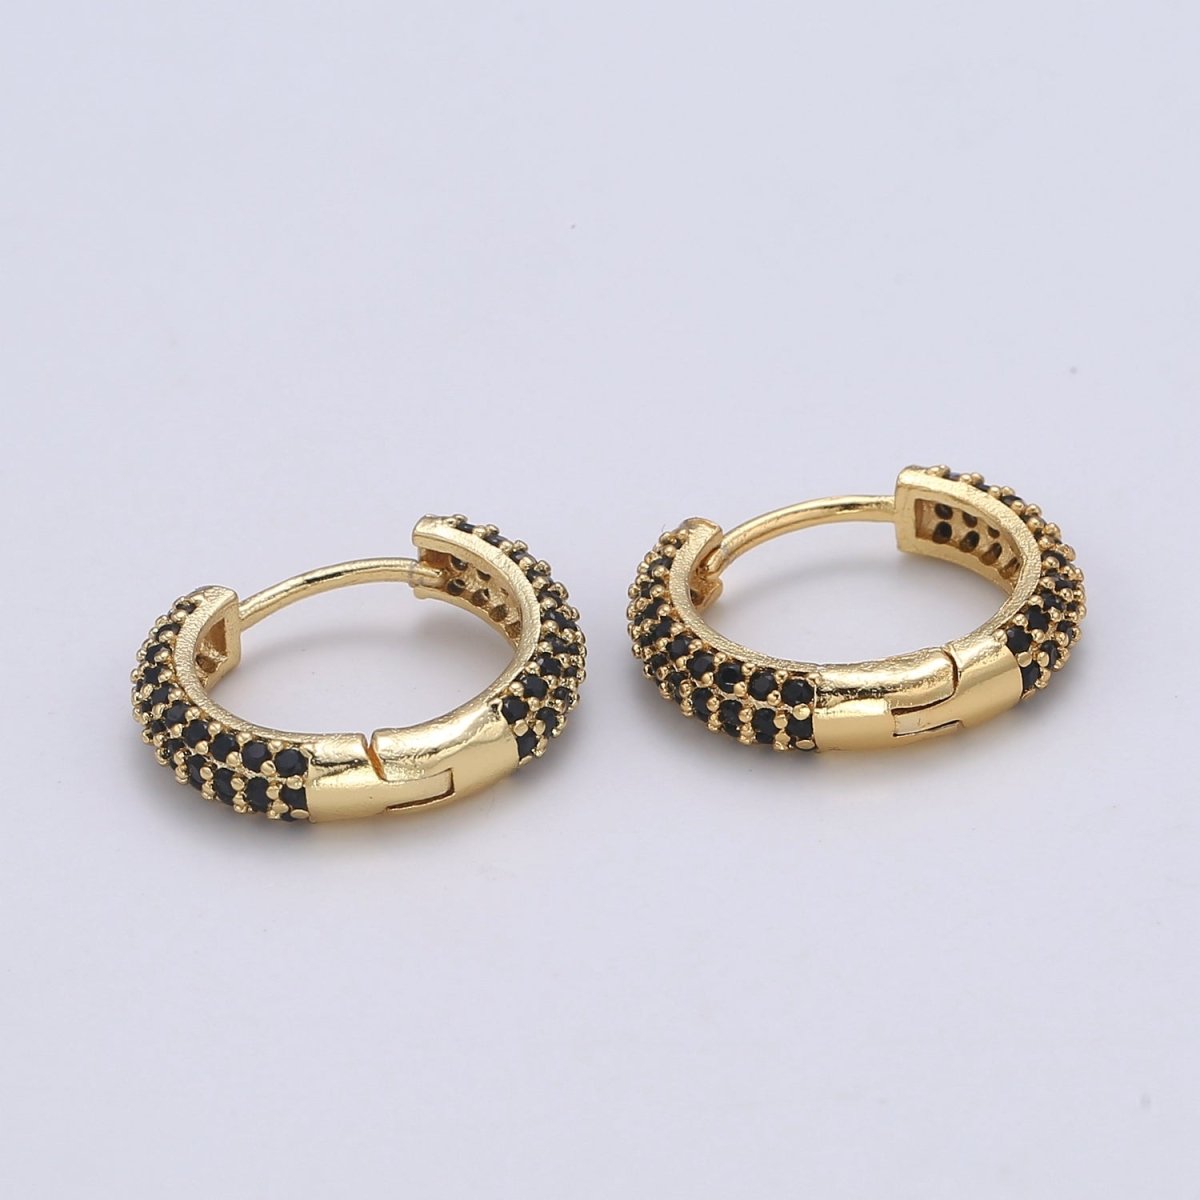 1 pair Hoops - Black, Blue, Clear, Red, Green, Multi-color Zirconia or Teal Gold CZ earrings - 24K Gold Huggie hoops EARRING-1412 - 1418 Q-434 - Q-440 - DLUXCA